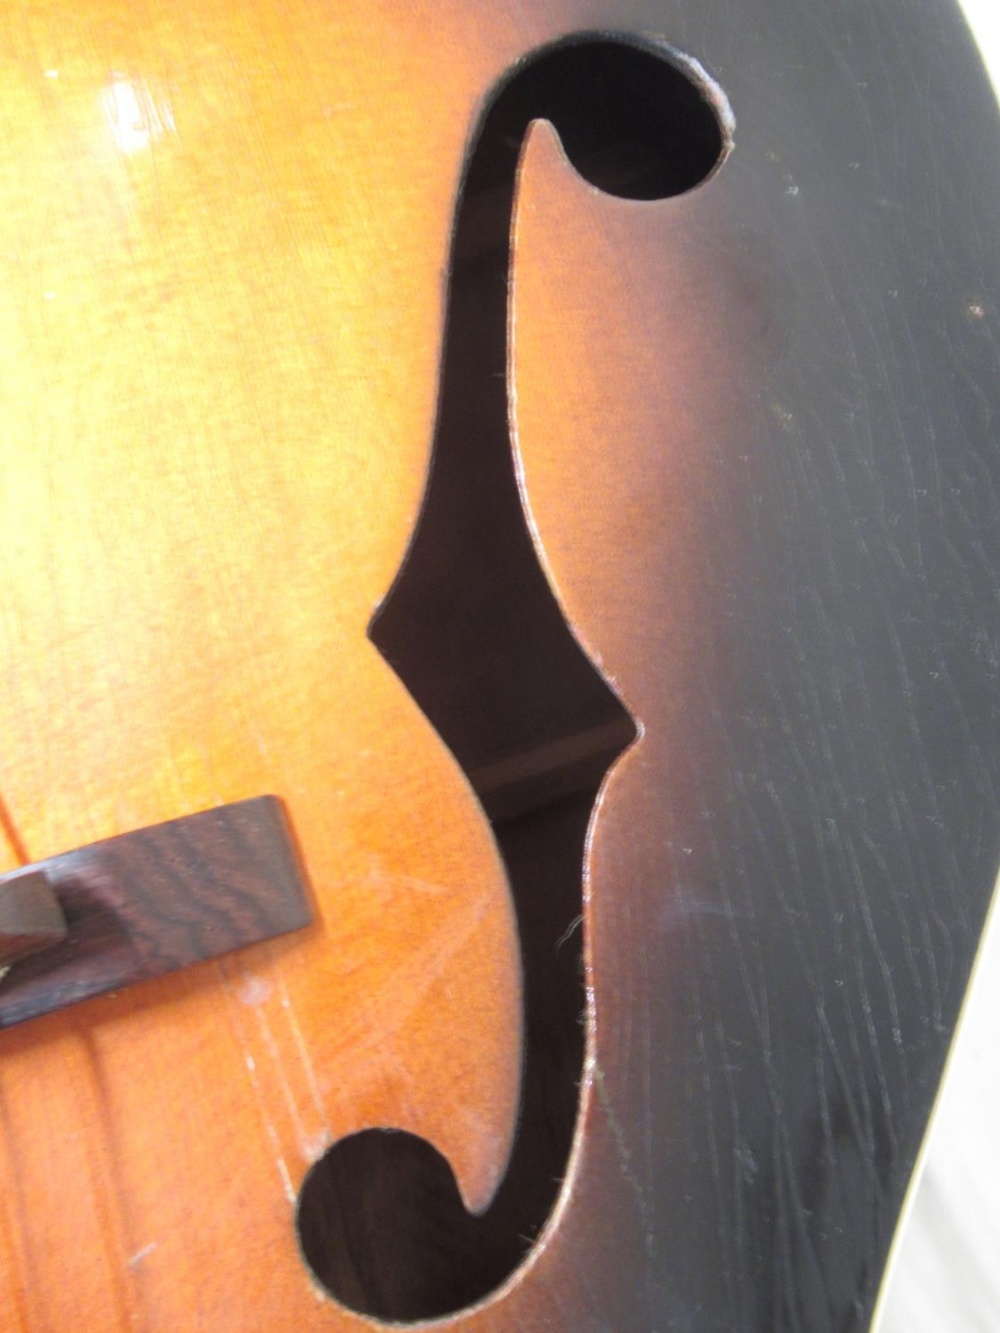 WITHDRAWN Kalamazoo by Gibson circa 1940s 6 string acoustic guitar, lacking Gibson sticker, serial n - Bild 4 aus 9